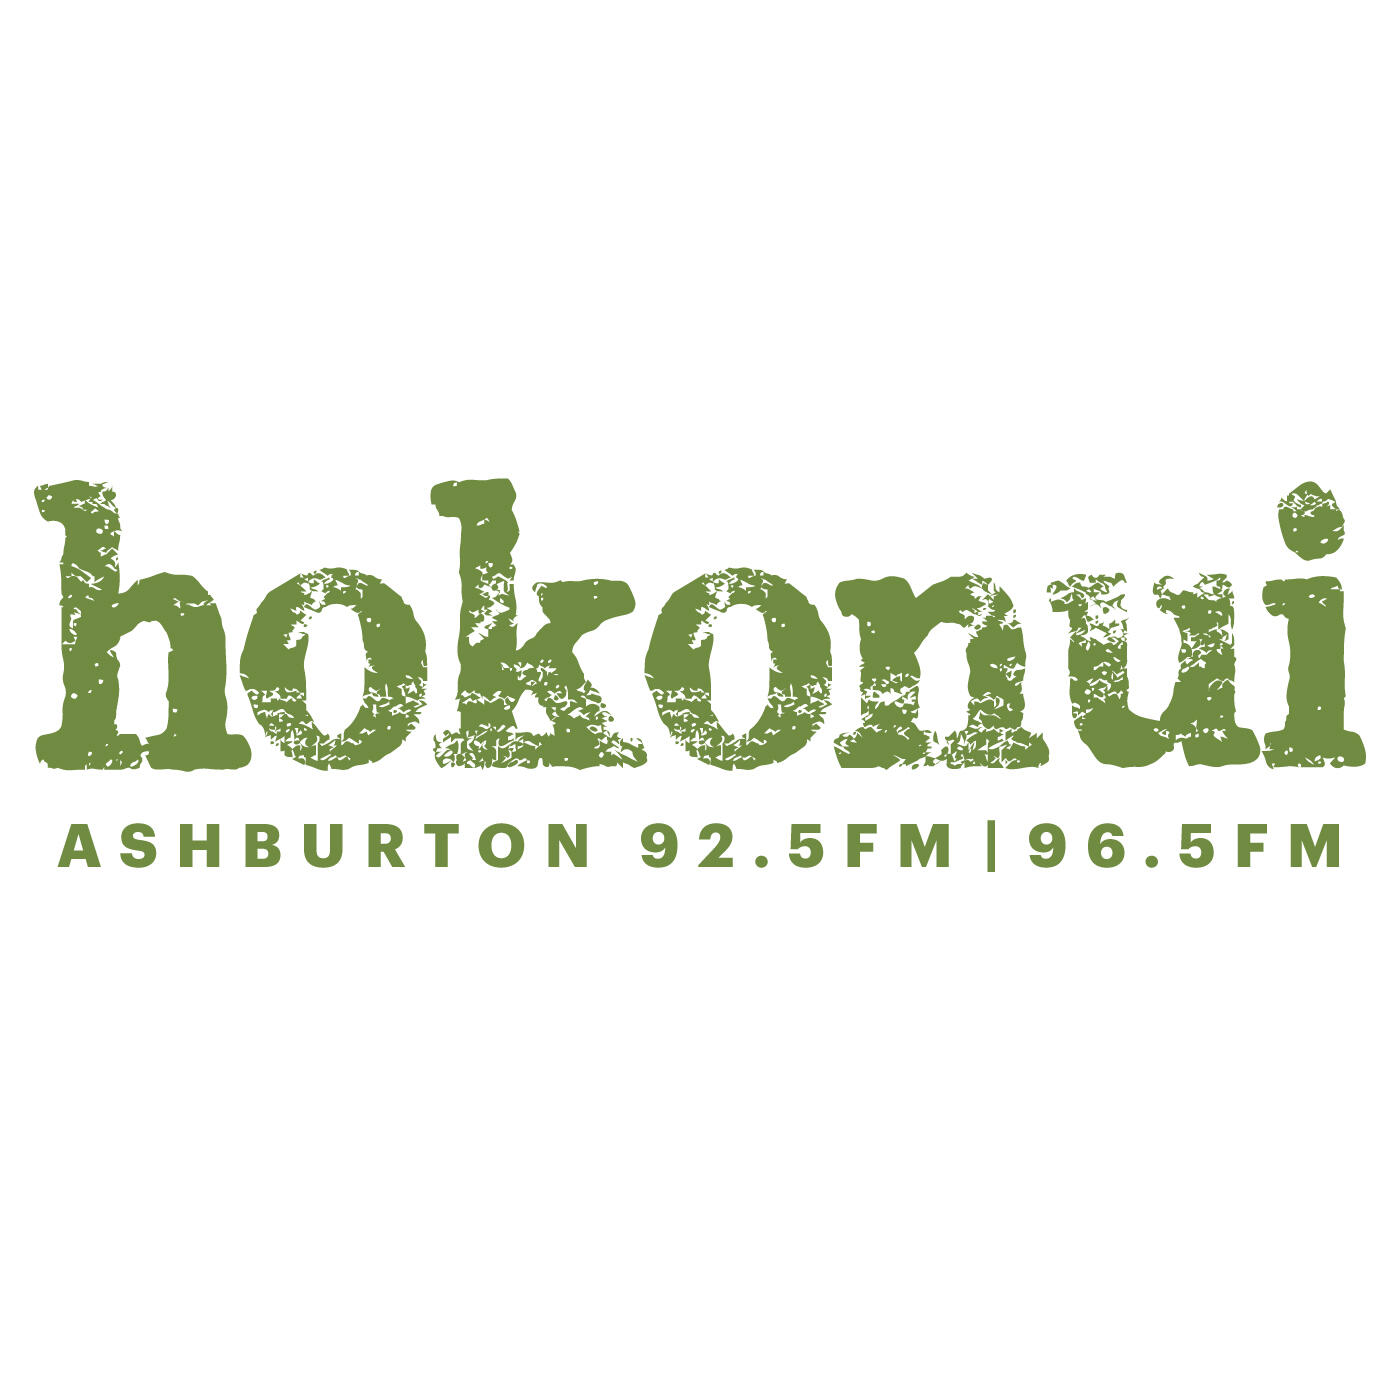 Hokonui Ashburton